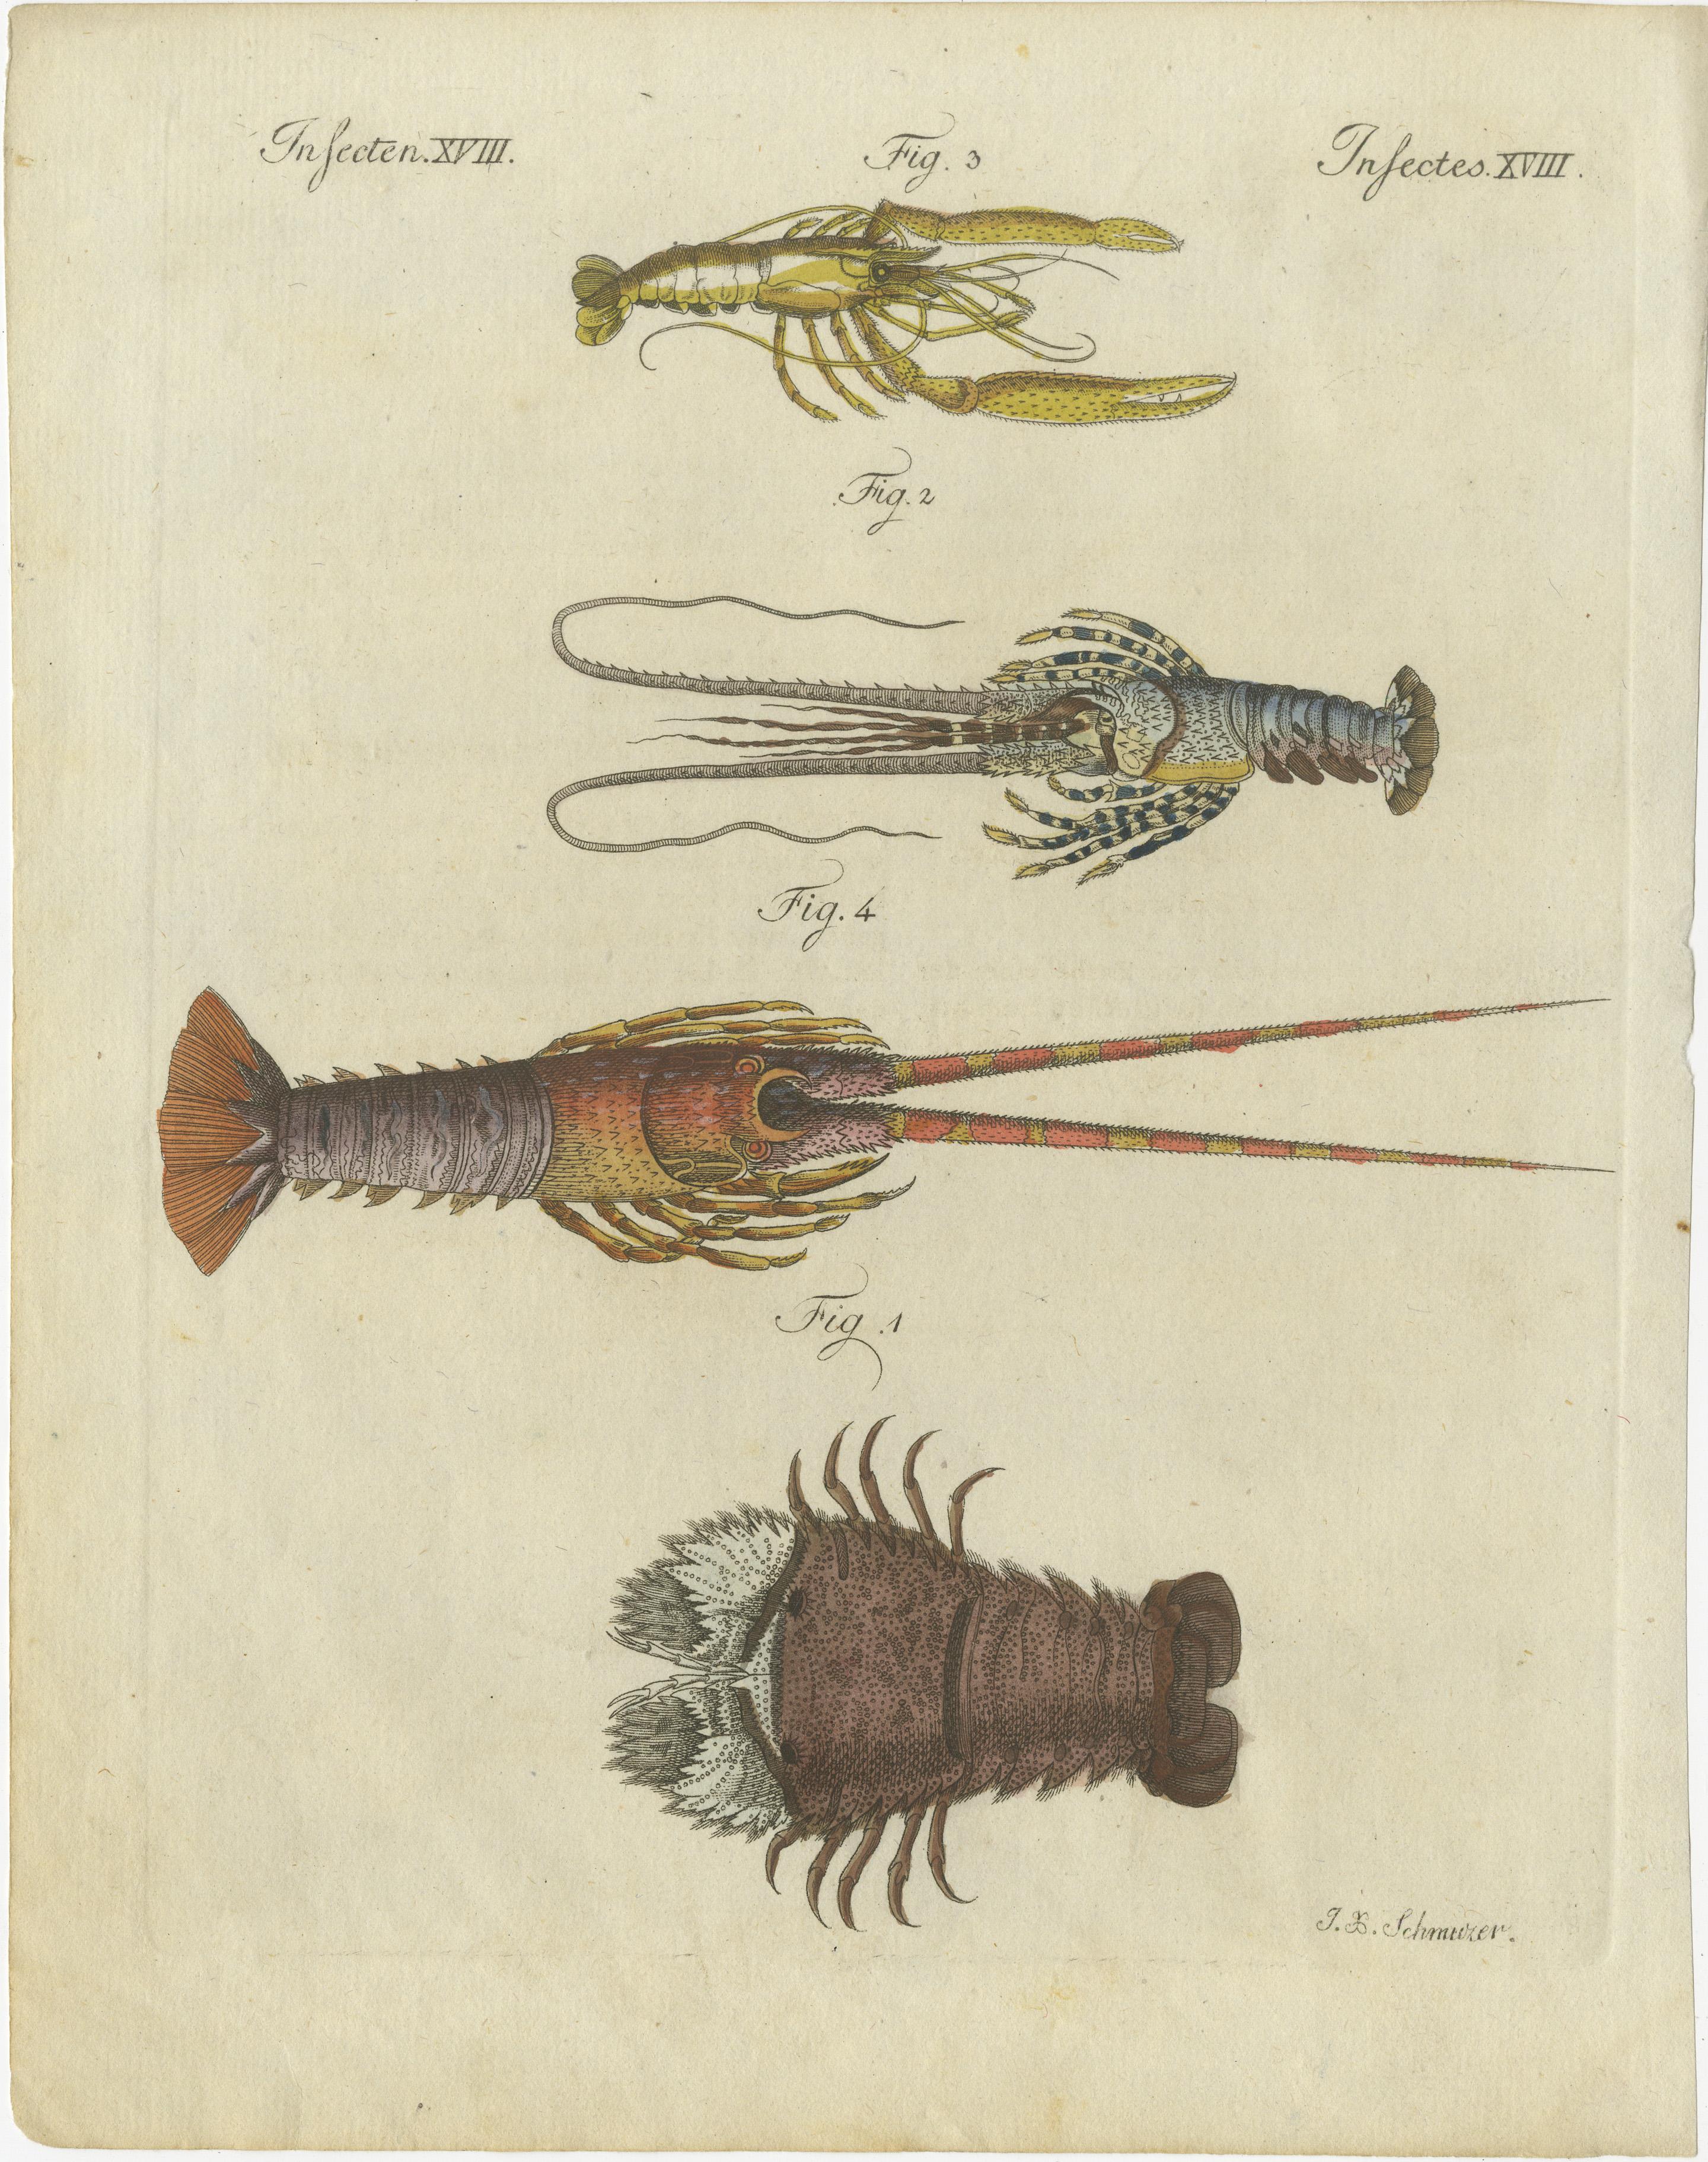 Cette gravure ancienne originale montre la langouste, Scyllarides squammosus 1, le homard, Homarus gammarus 2, la crevette pitu, Macrobrachium carcinus 3, et la langouste, Palinurus elephas 4. 

Provient du 